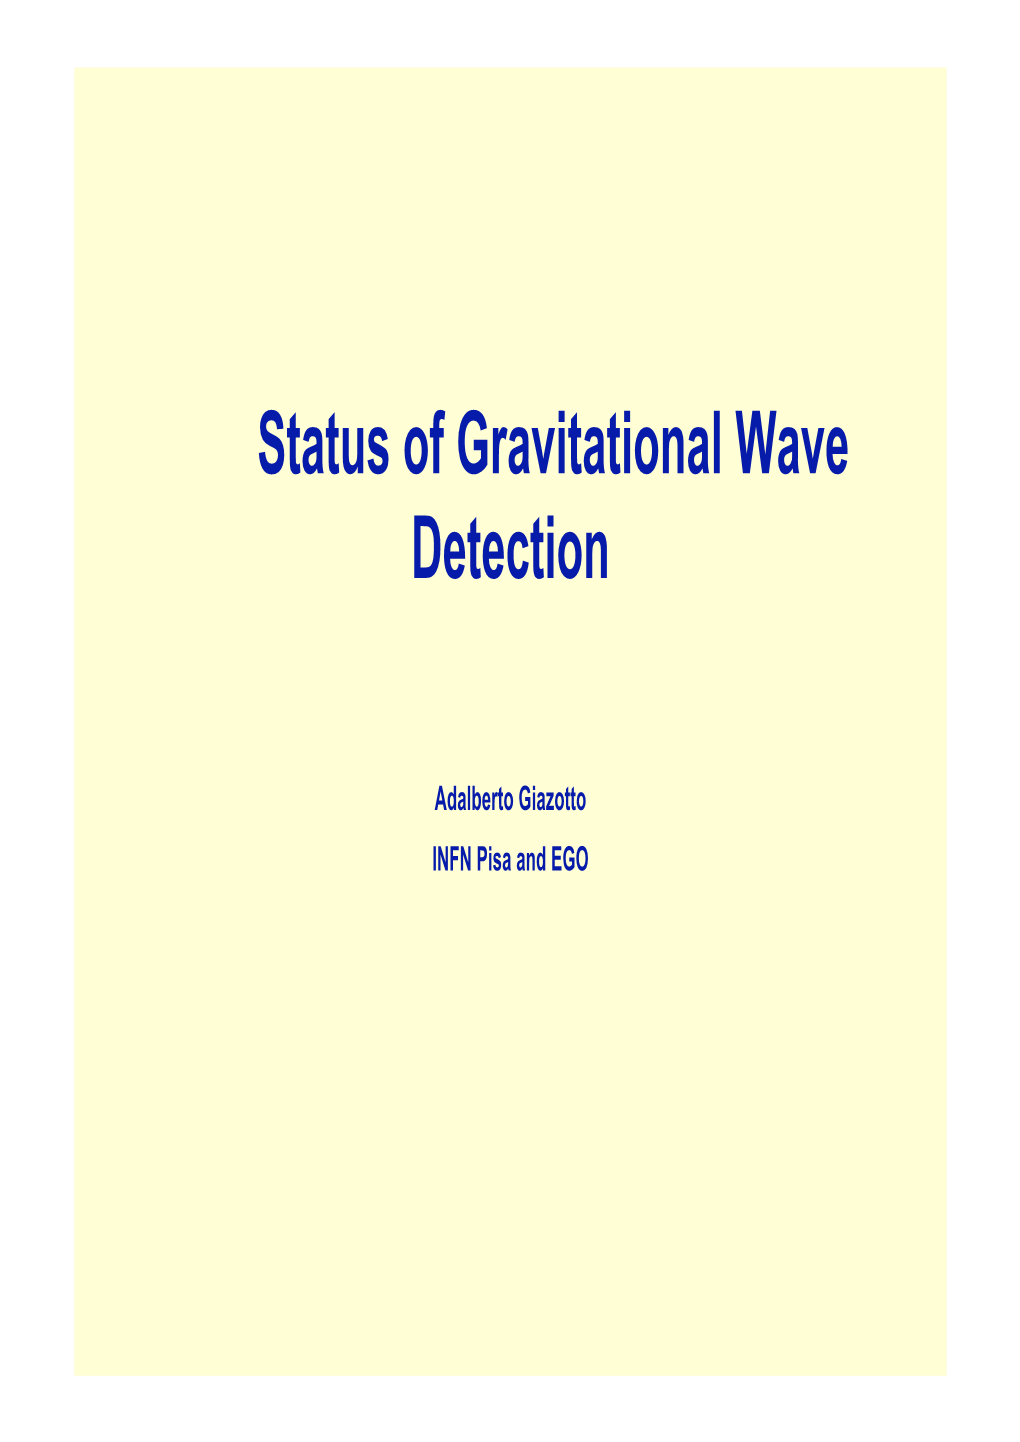 Status of Gravitational Wave Detection